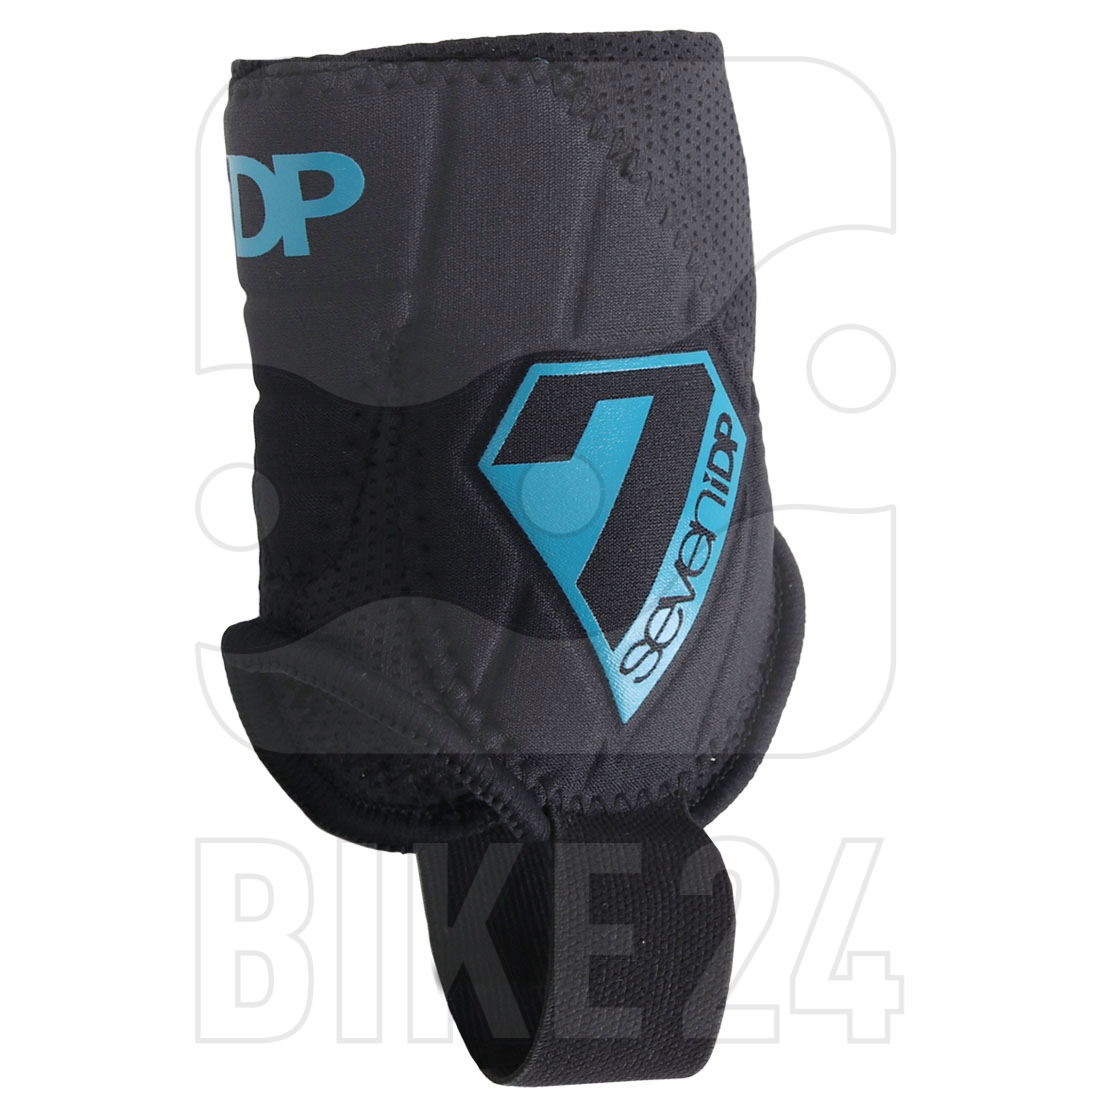 Foto de 7 Protection 7iDP Control Ankle Protector Pads - black-blue